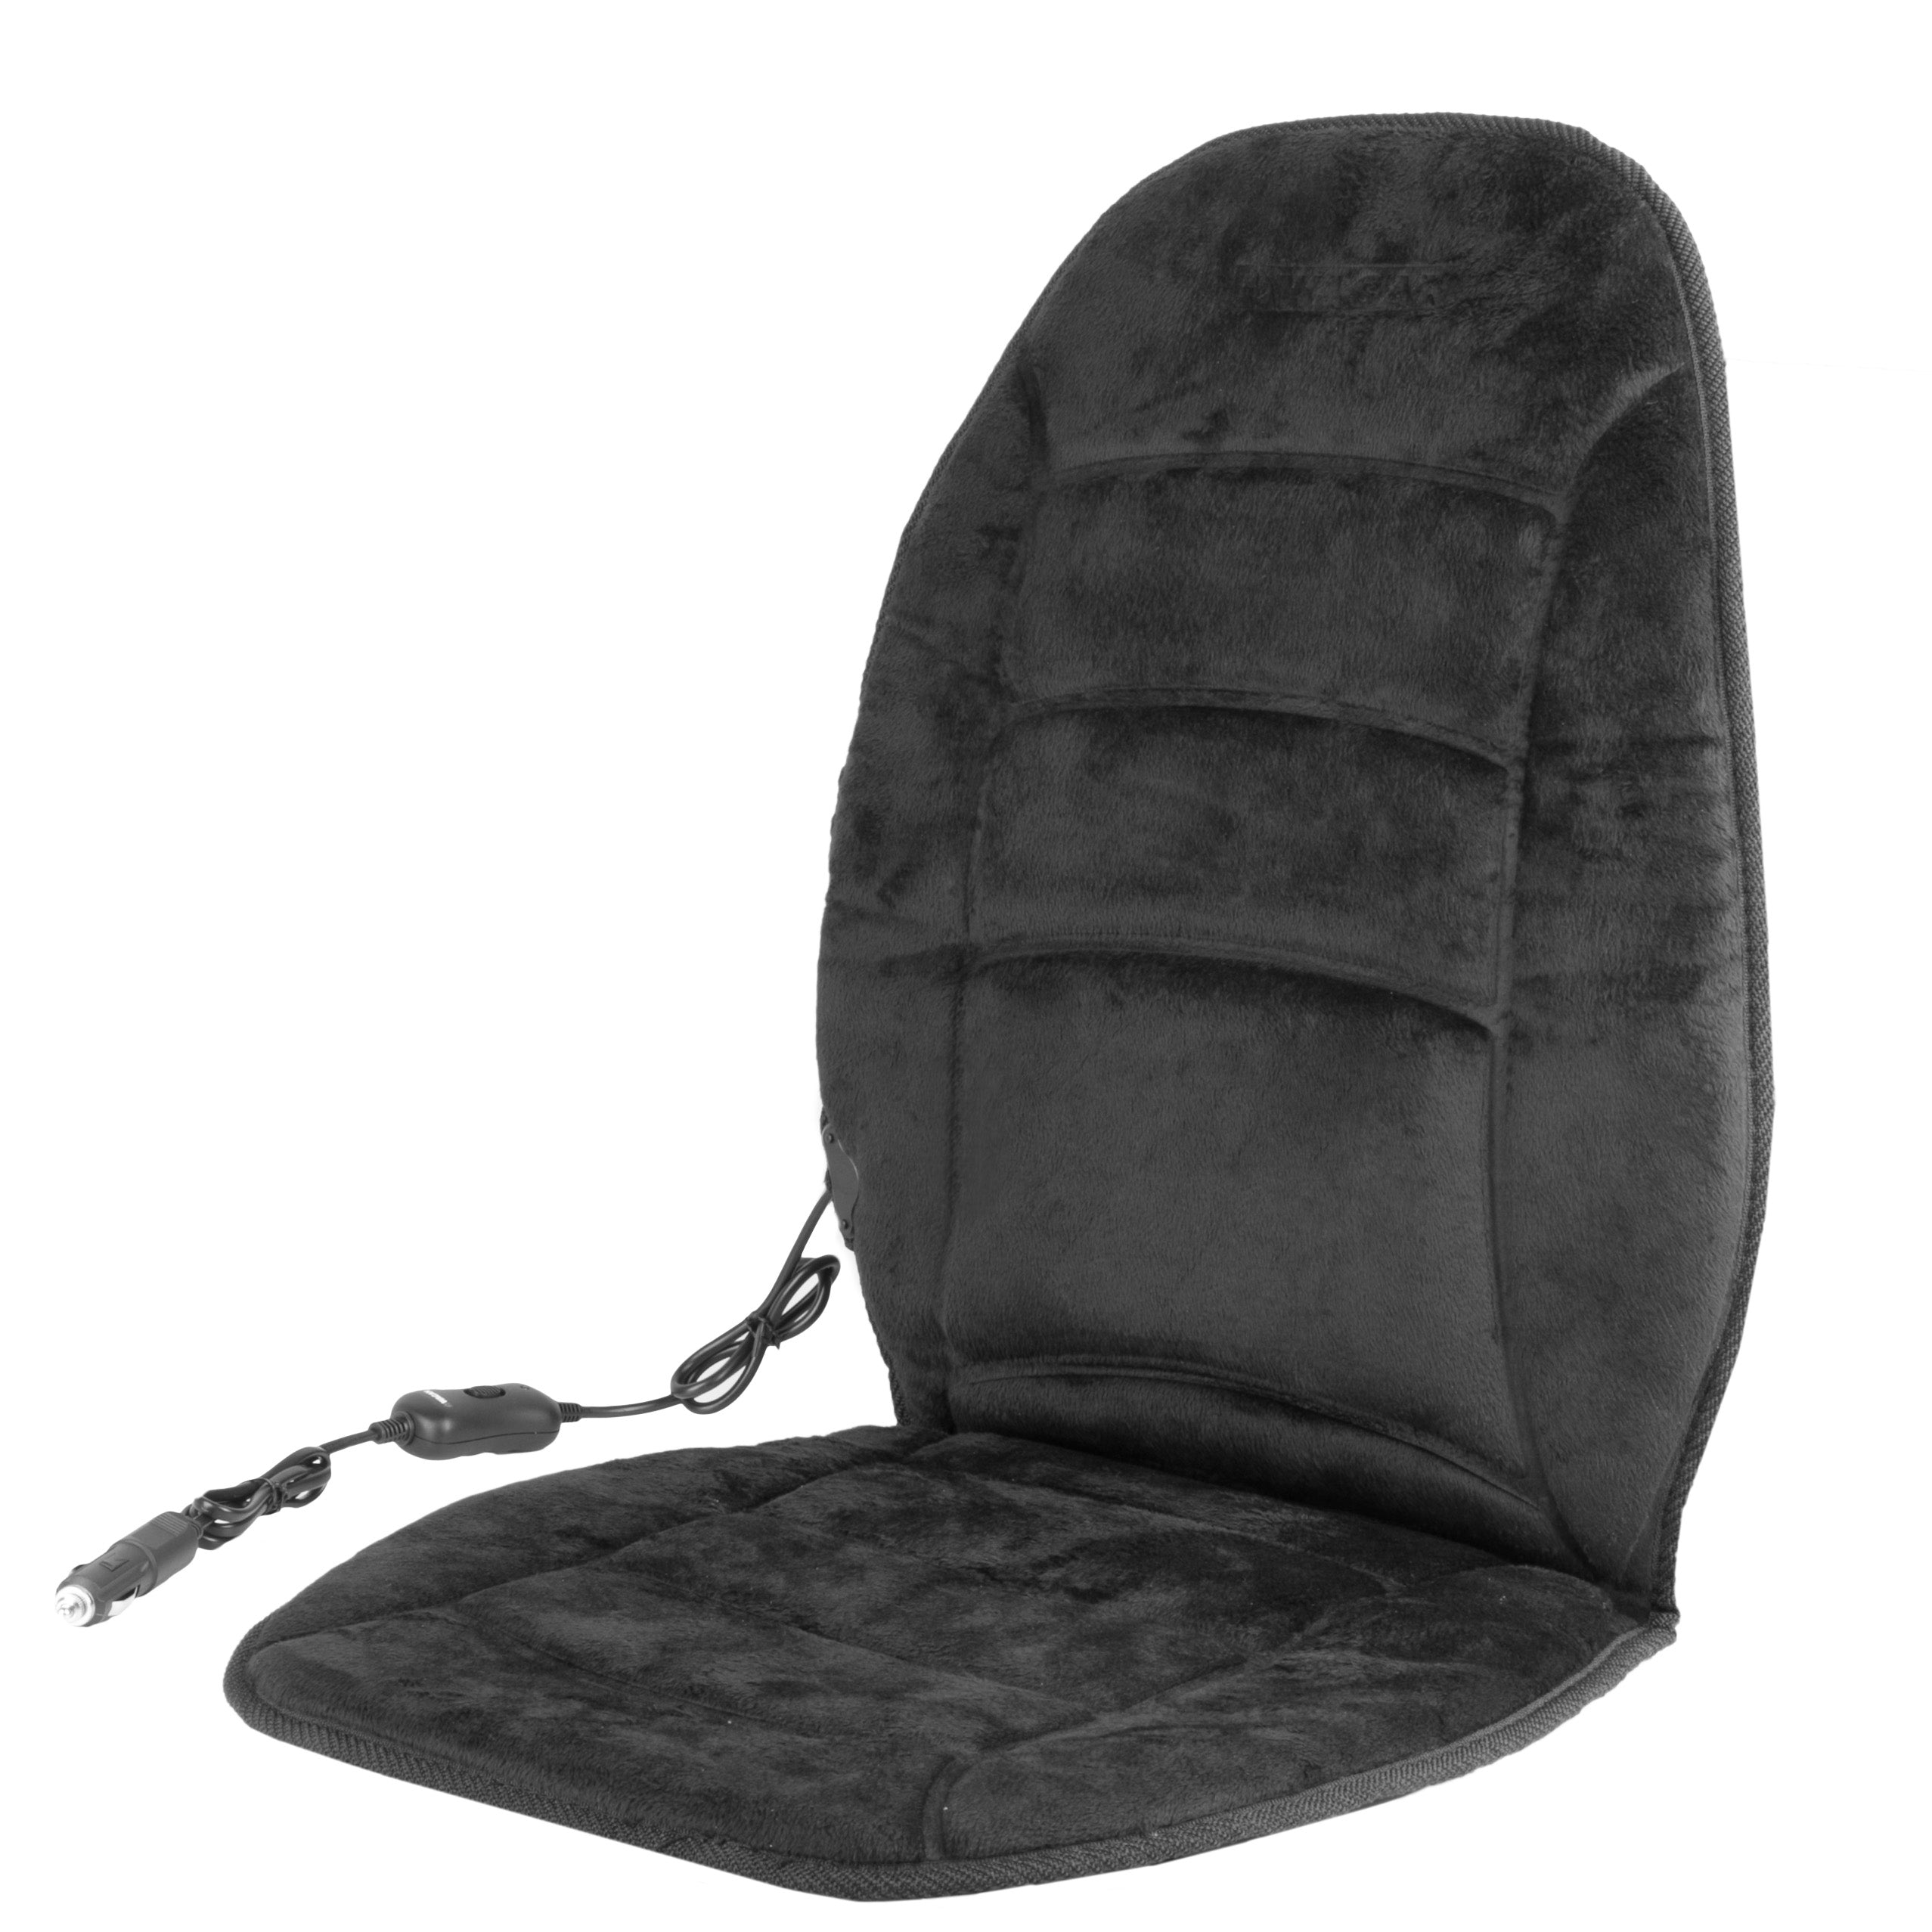 Deluxe Velour Heated Seat Cushion, Comfort